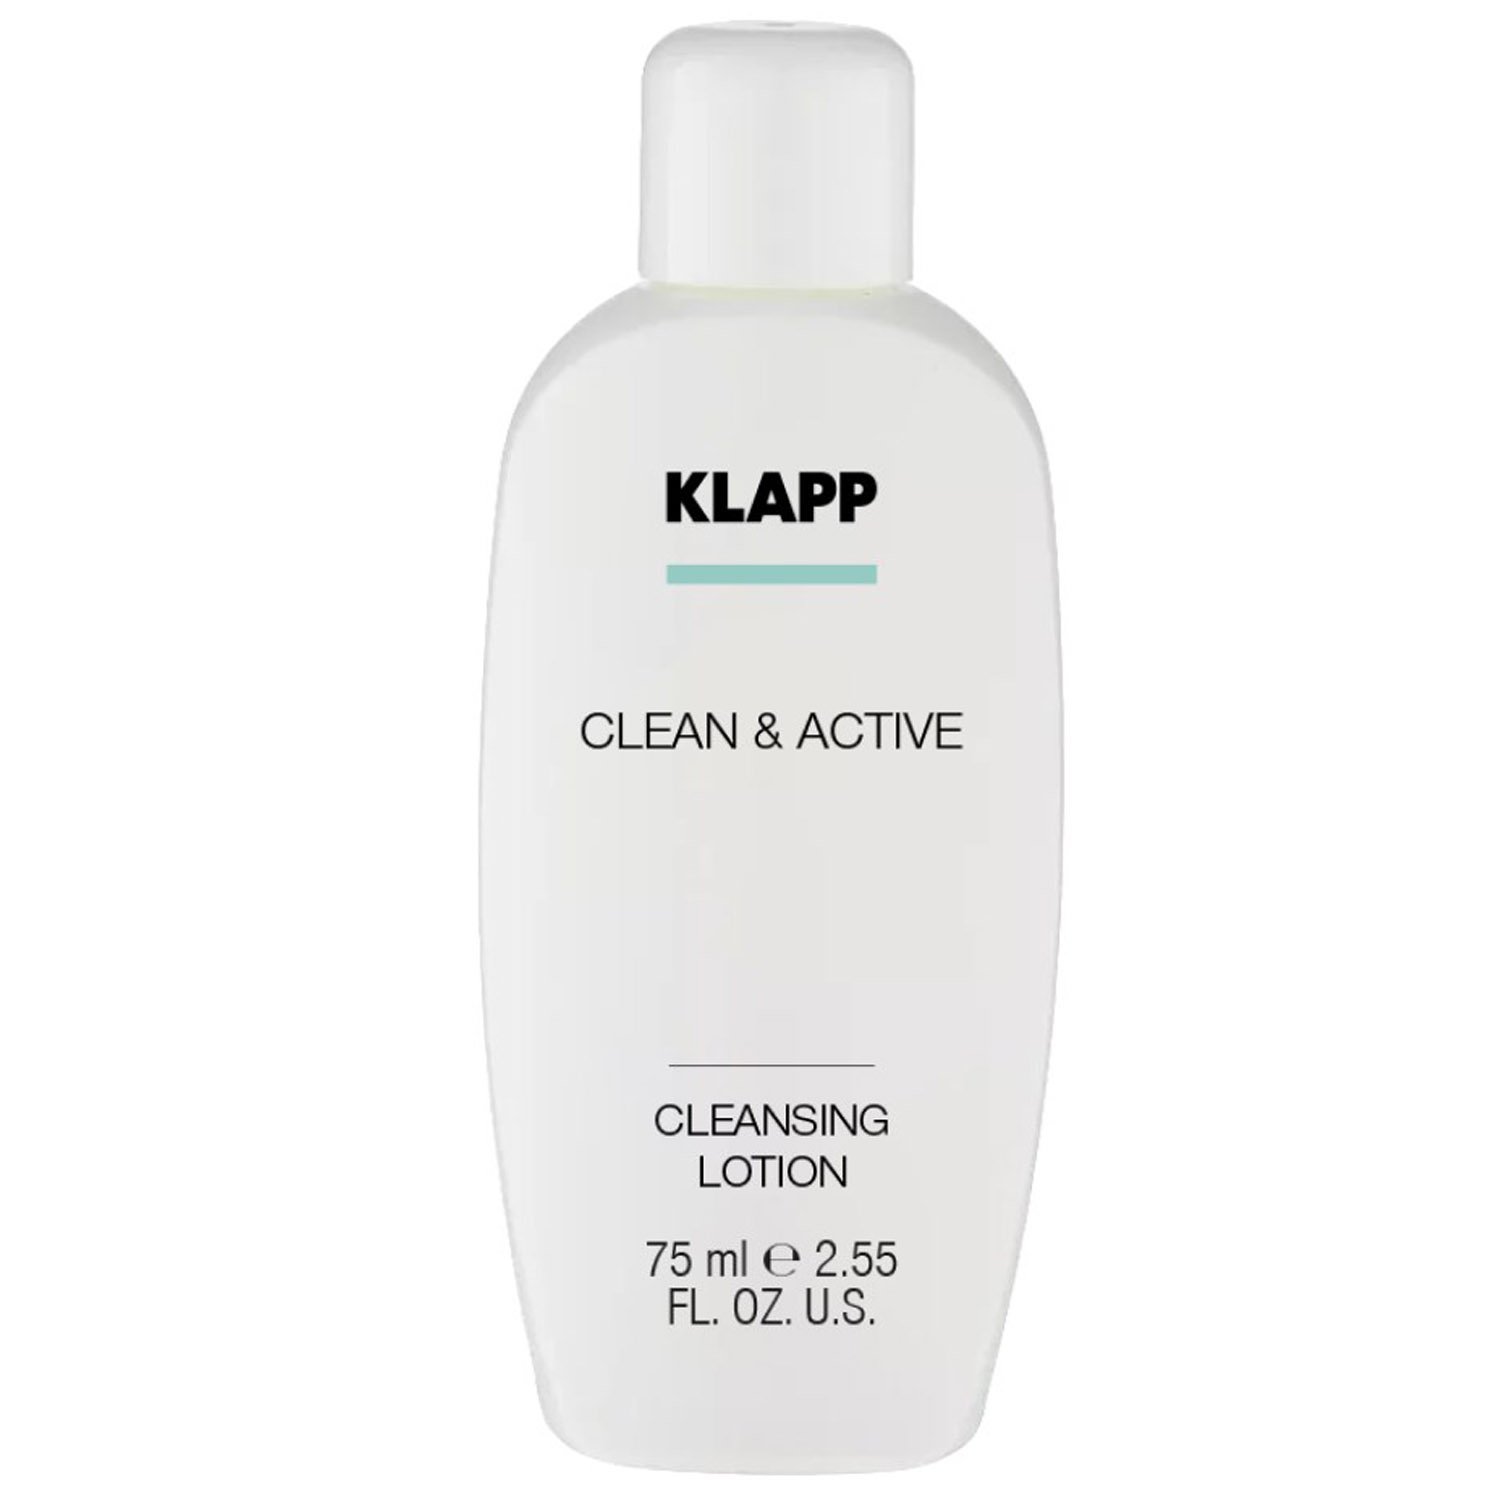 Очищающее молочко Klapp Clean & Active Cleansing Lotion, 75 мл - фото 1